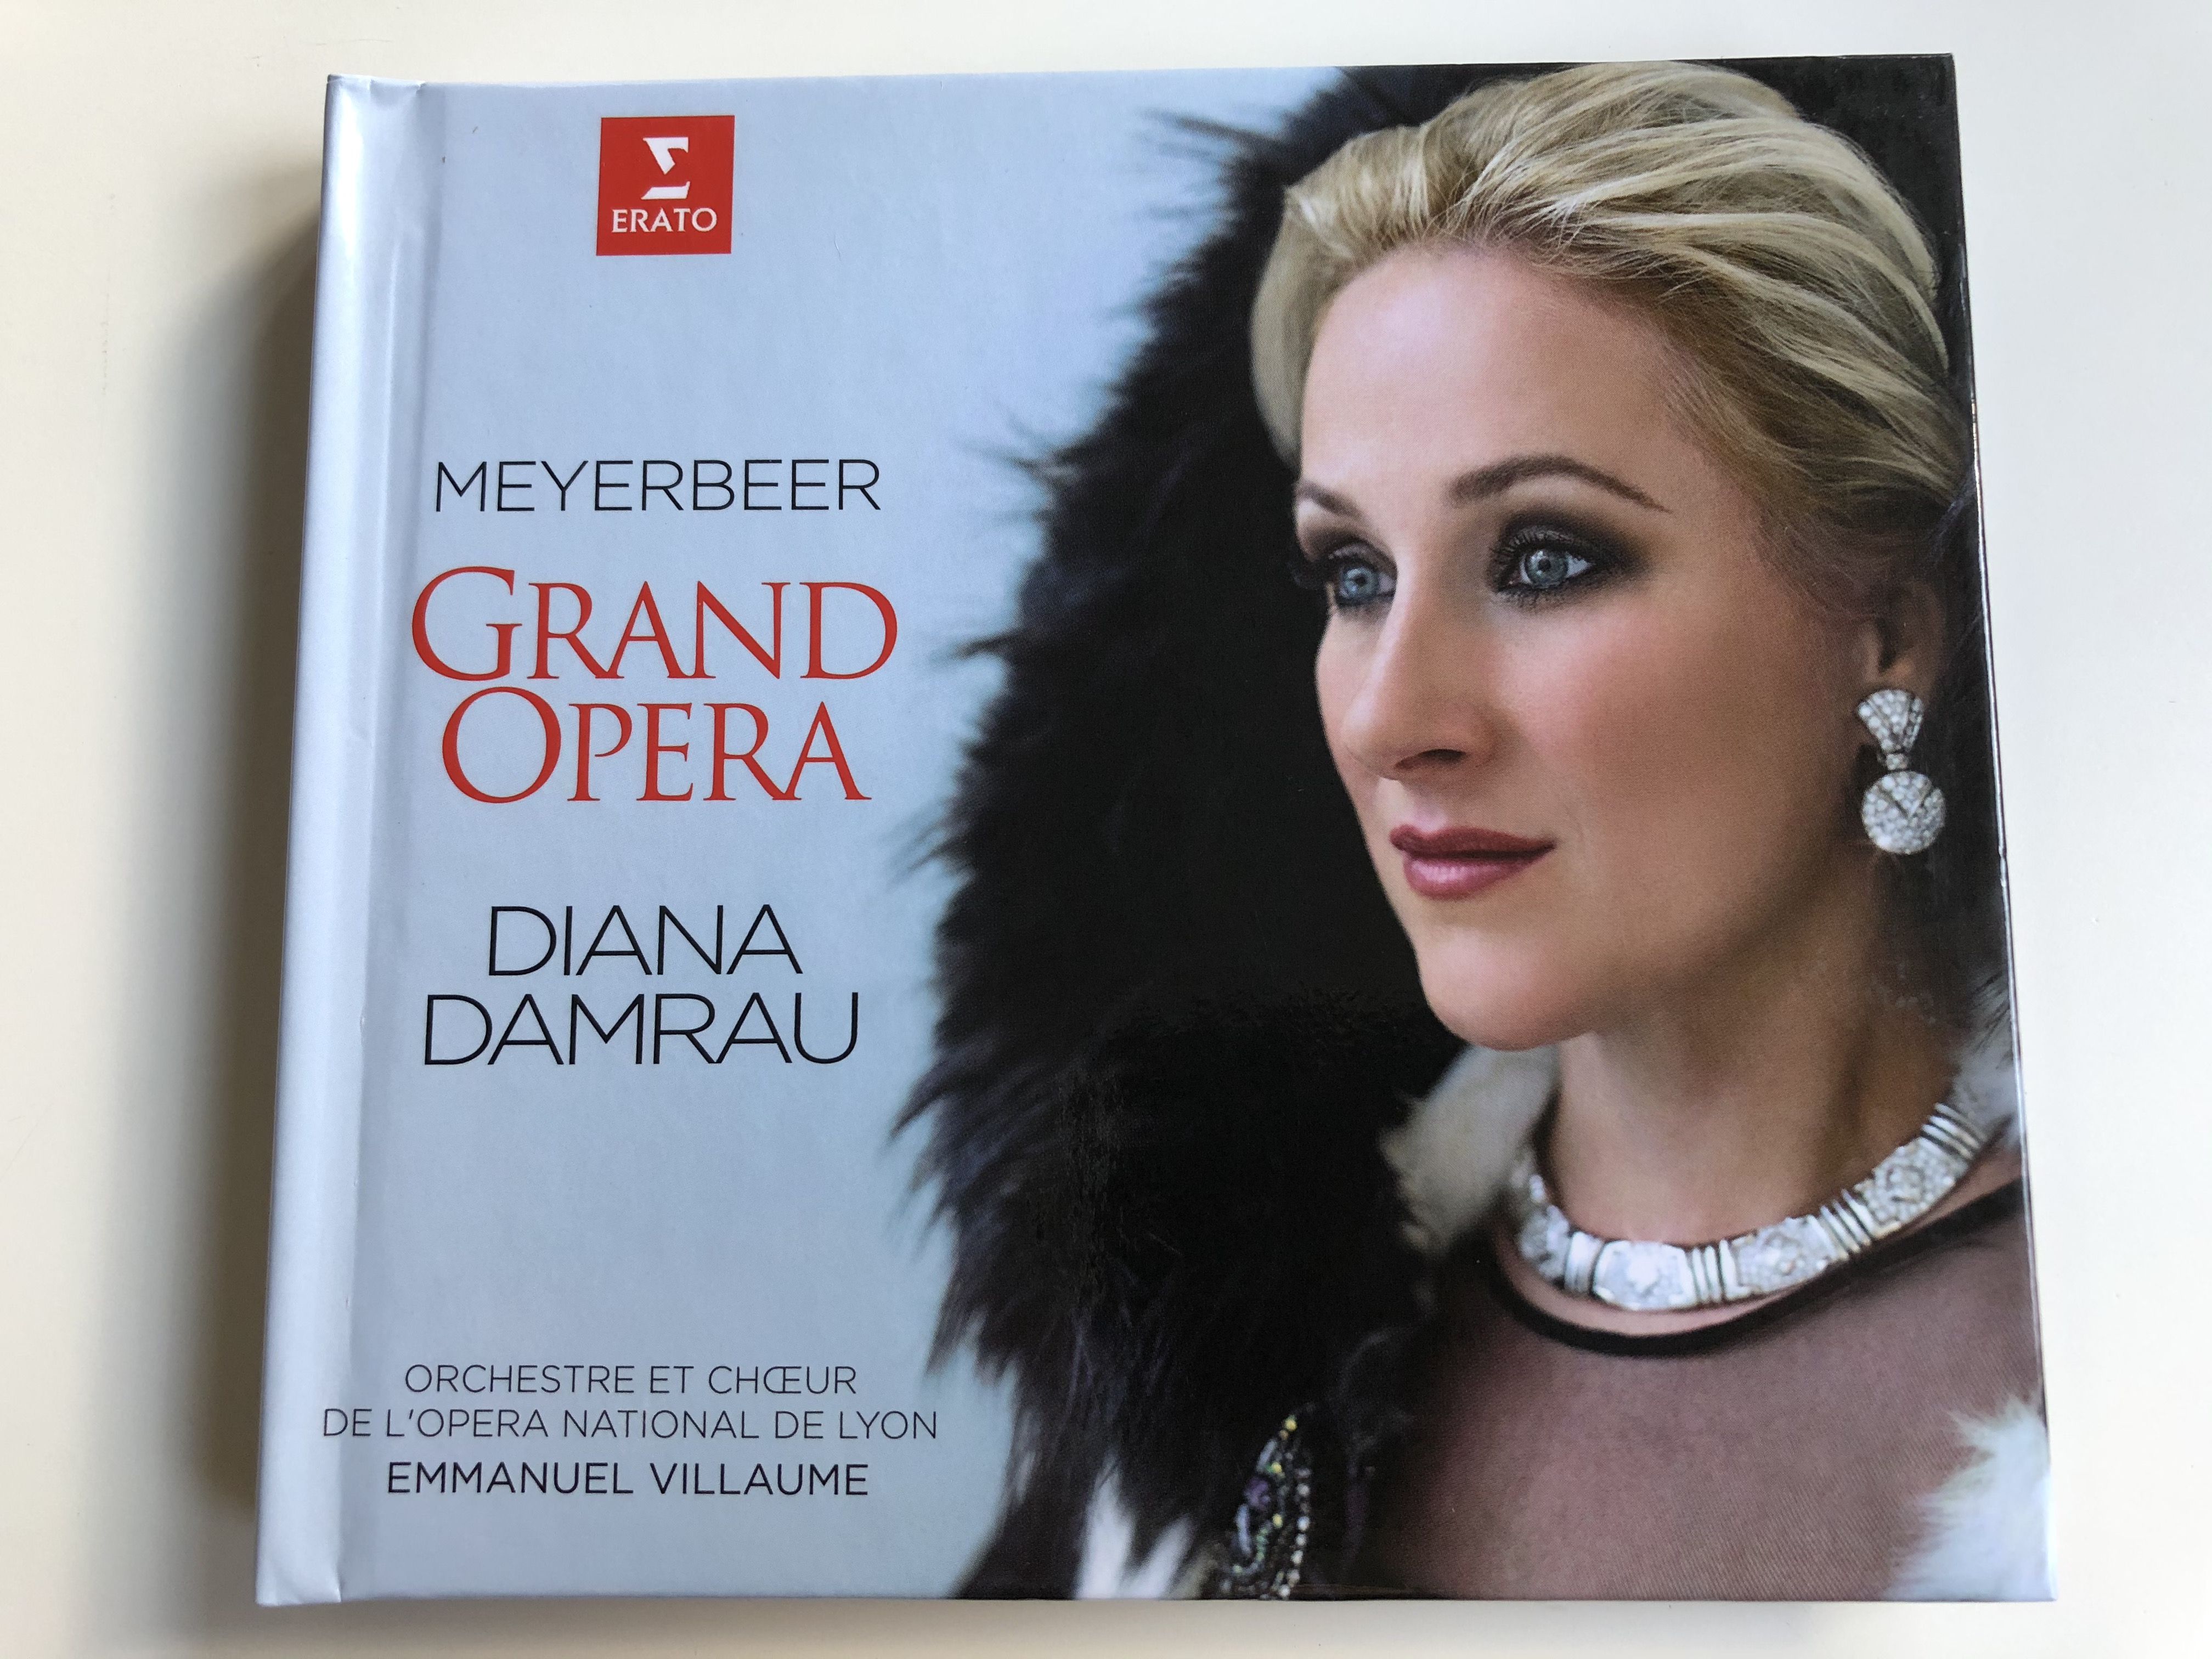 meyerbeer-grand-opera-diana-damrau-orchestre-et-ch-ur-de-l-op-ra-national-de-lyon-emmanuel-villaume-erato-audio-cd-2017-0190295848996-1-.jpg